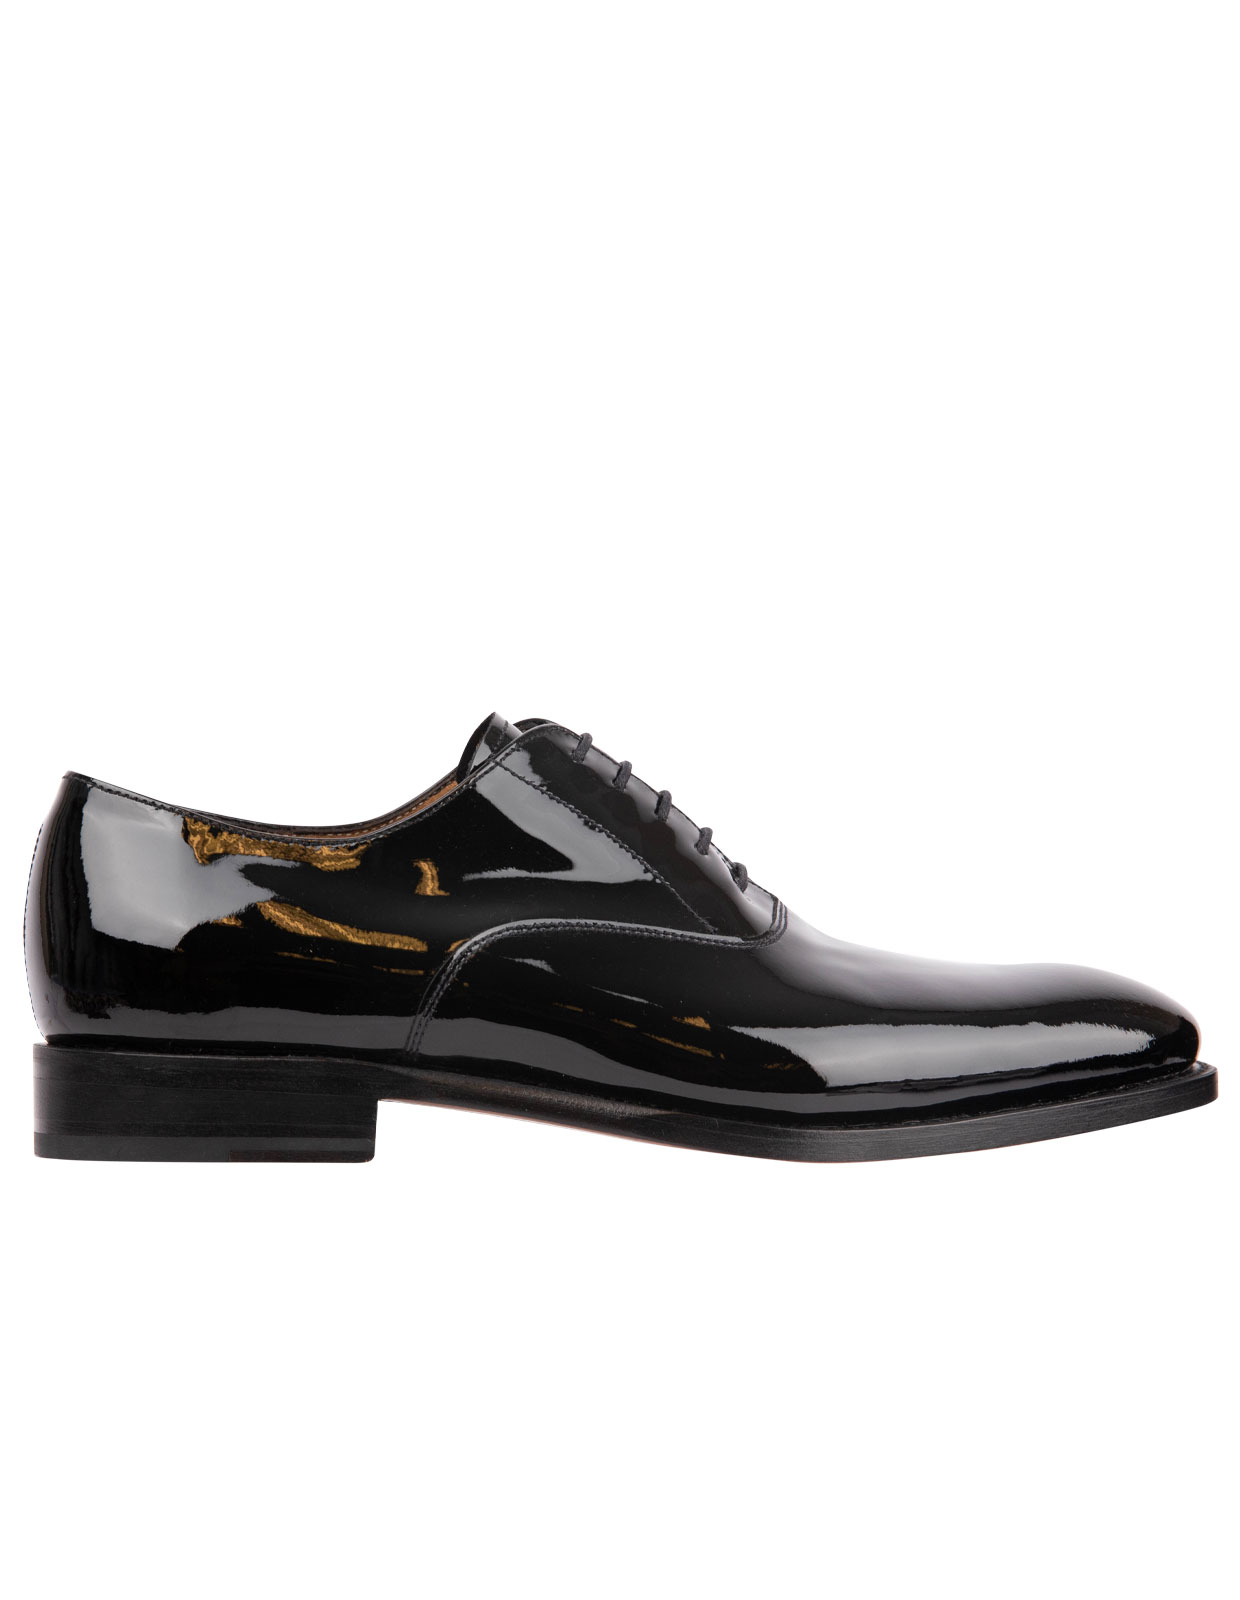 Patent Leather Oxford Shoe Black Stl 7